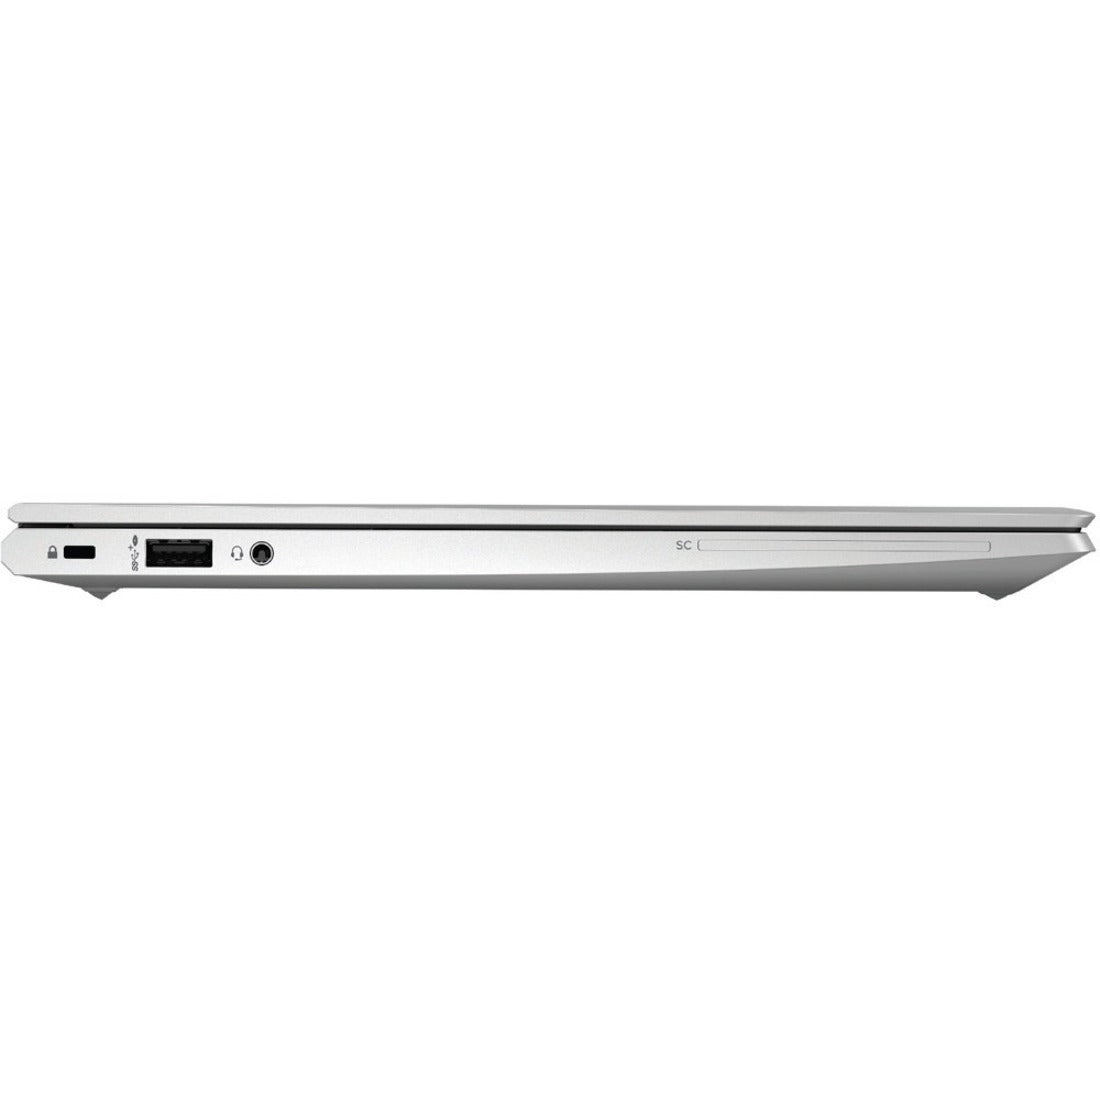 HP ProBook 630 G8 13.3" Notebook, Intel Core i7 11th Gen, 16GB RAM, 512GB SSD, Windows 10 Pro